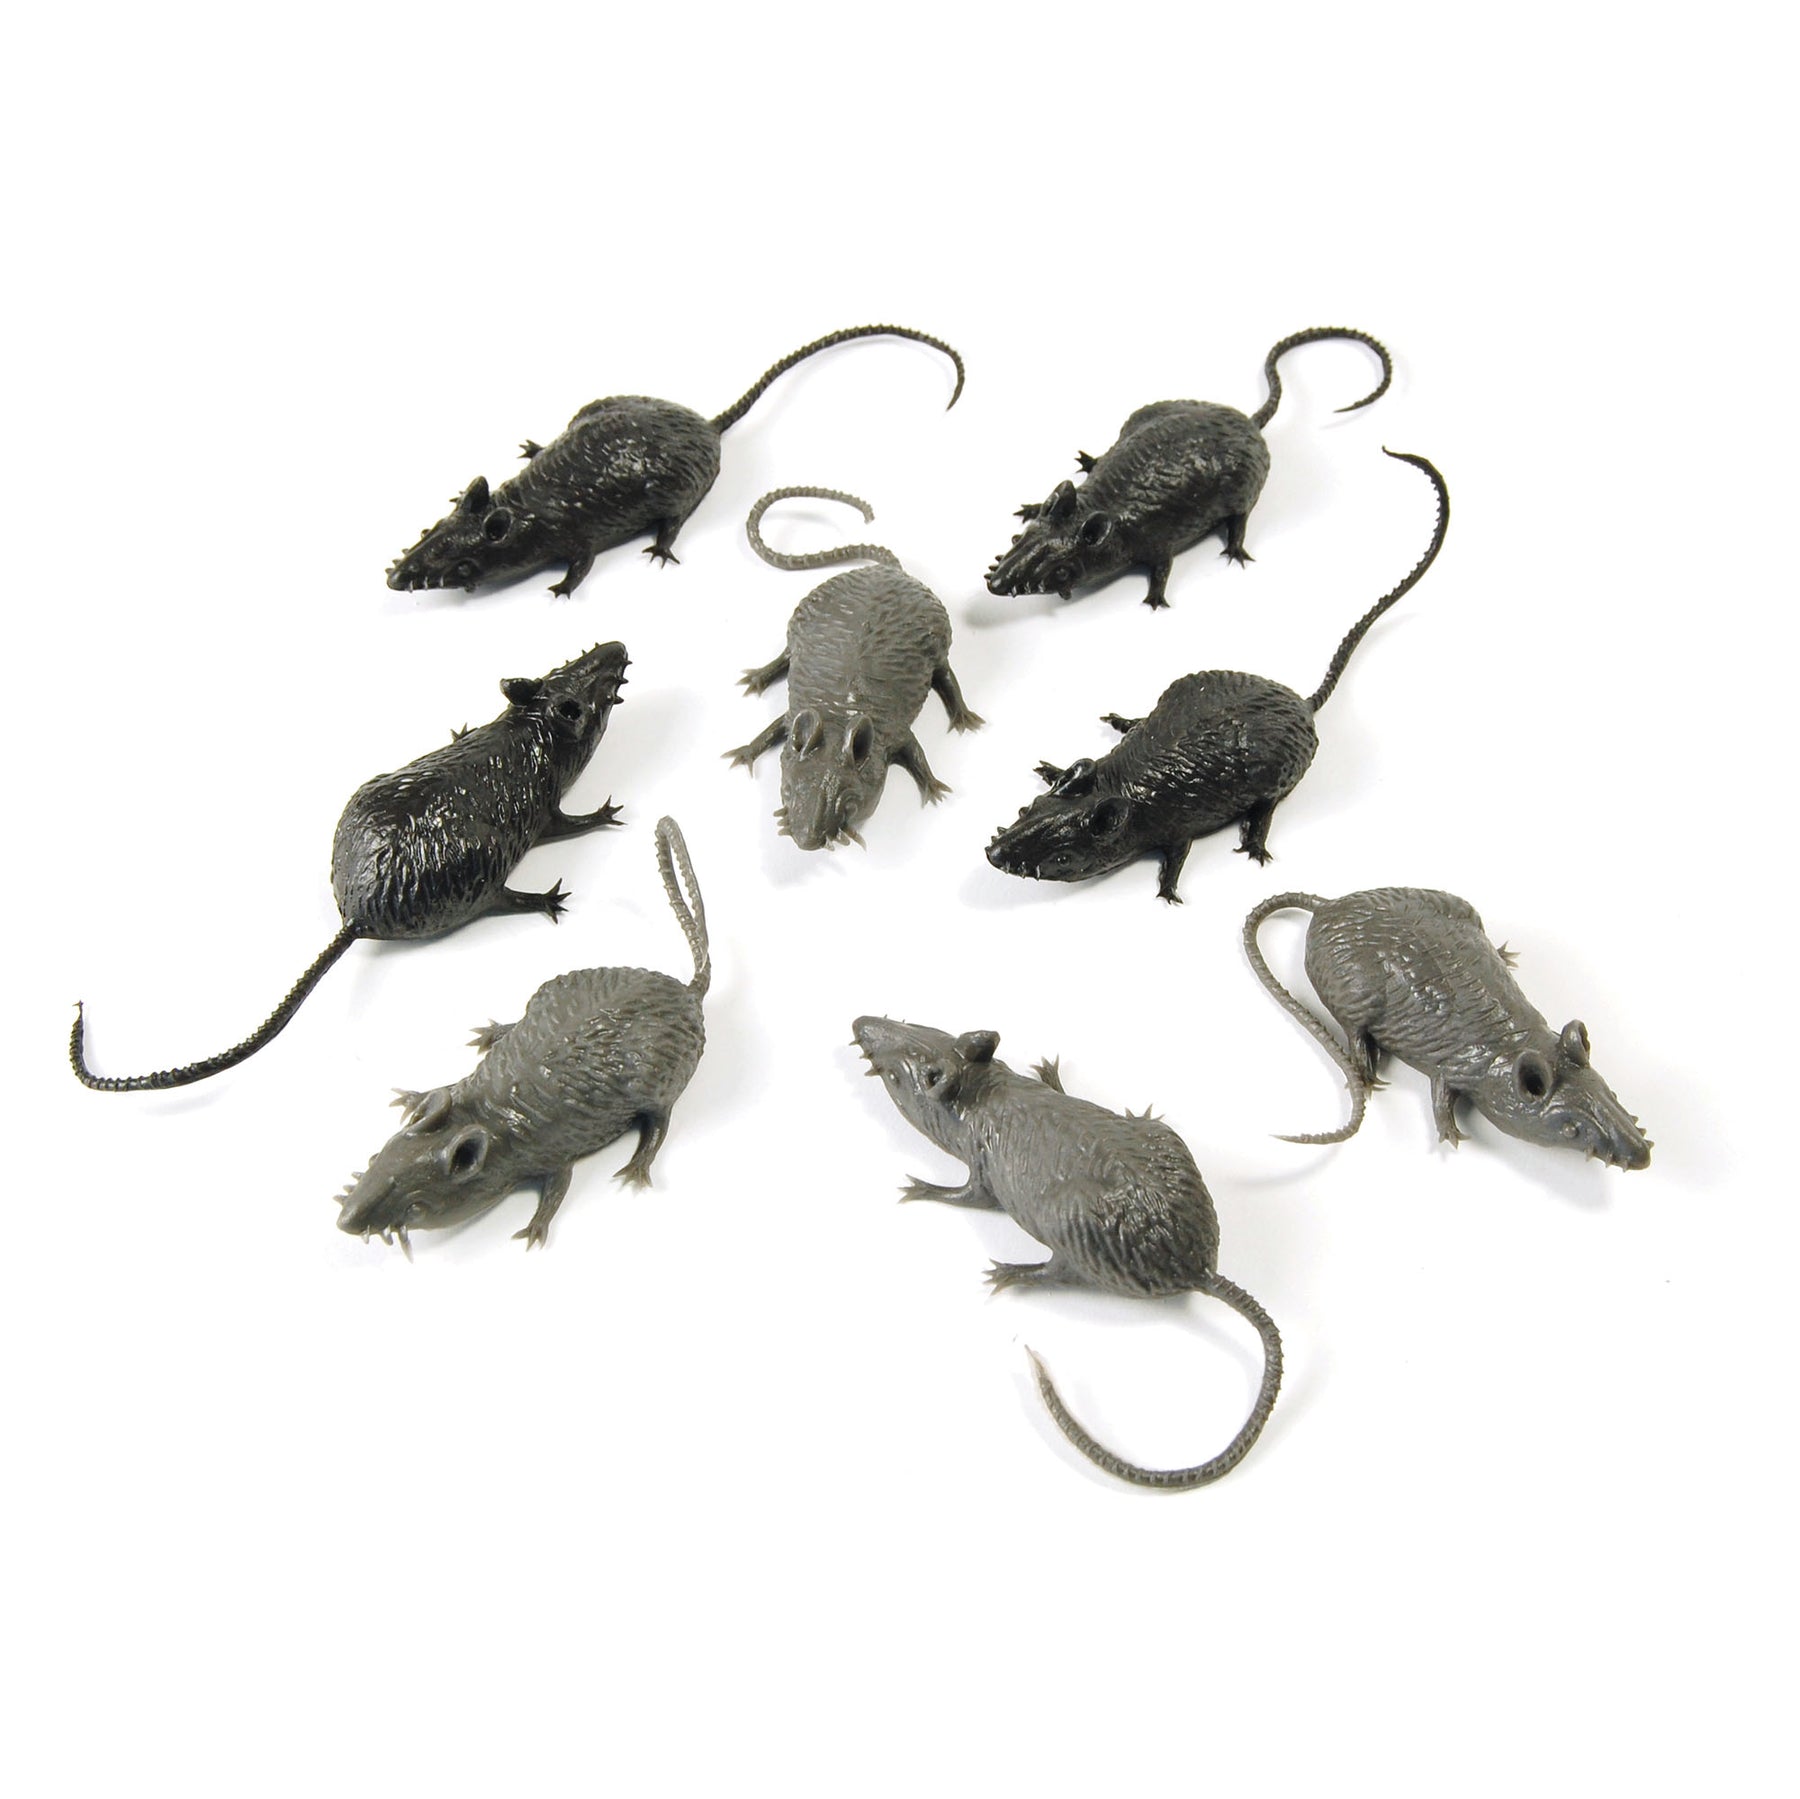 Small Mice